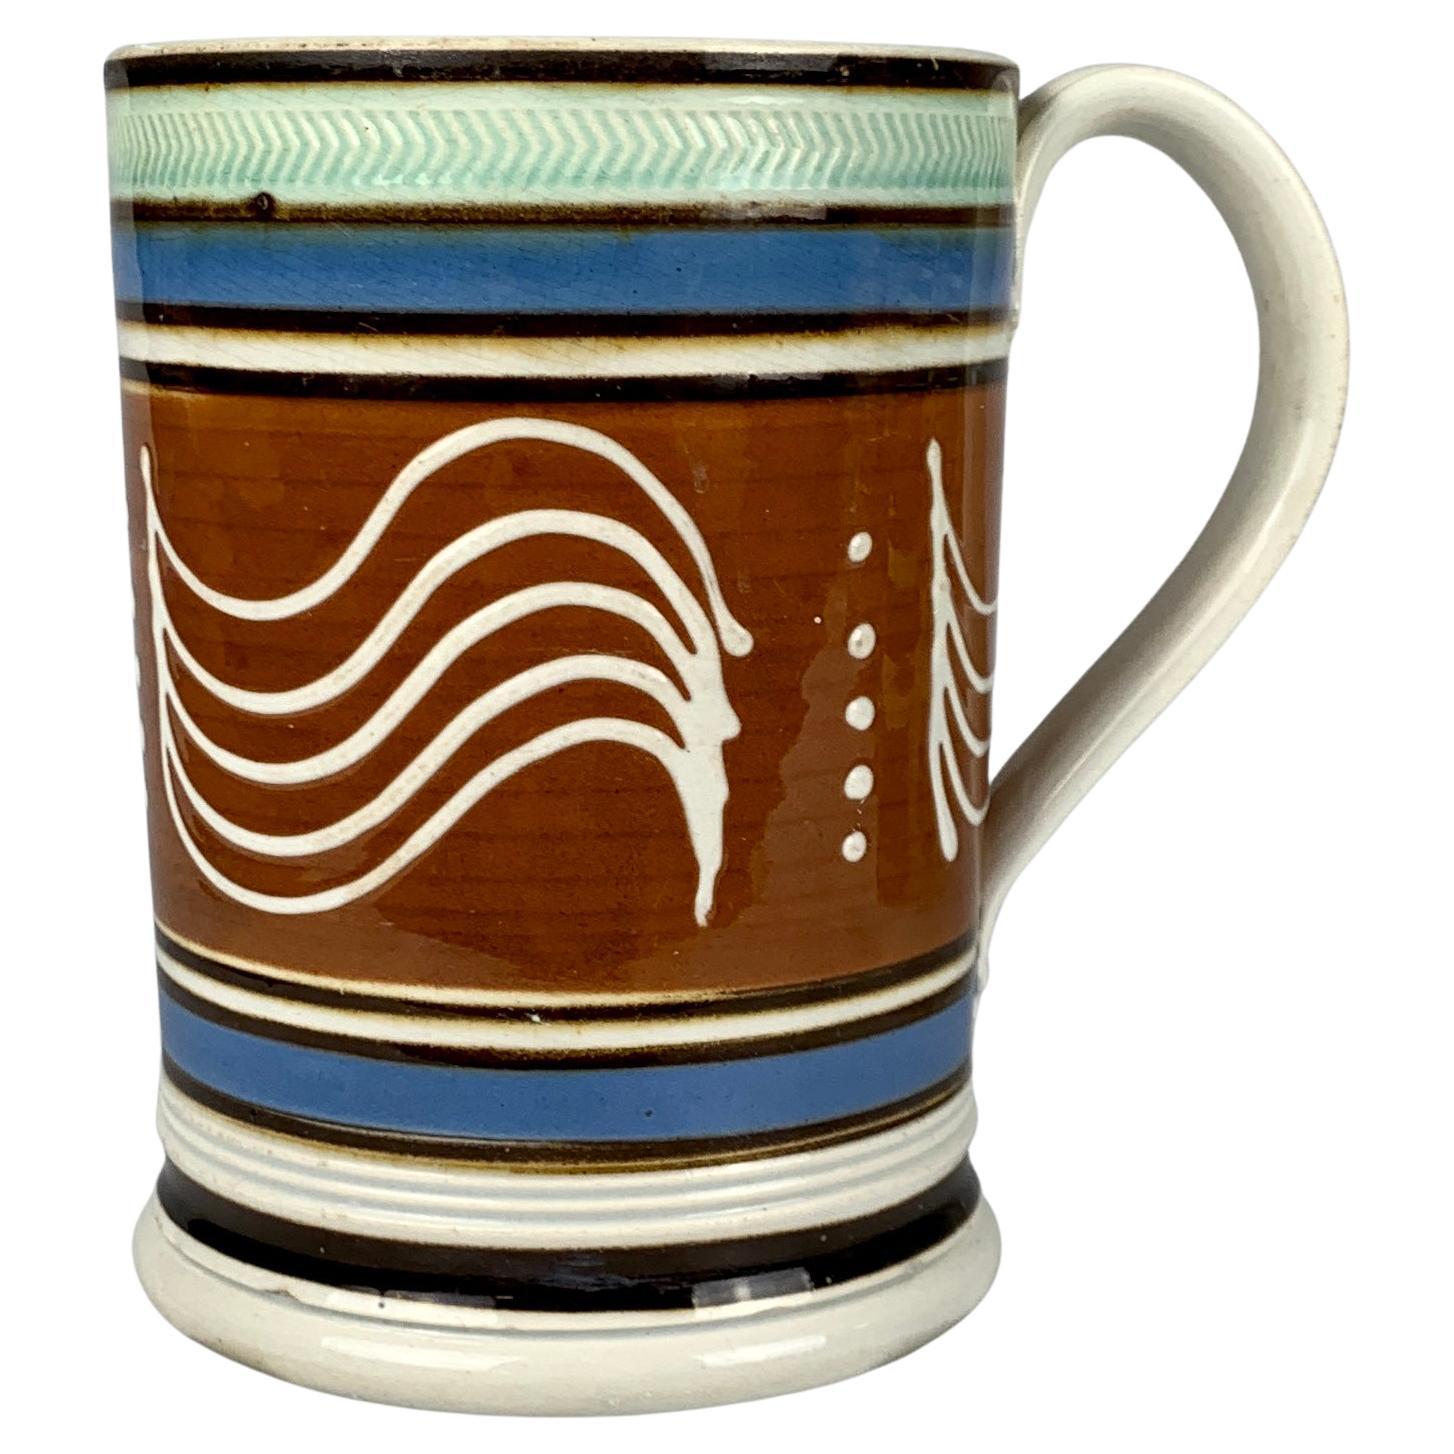 Large Mochaware Mug with Wavy Line Slip Decoration, England, Circa 1820